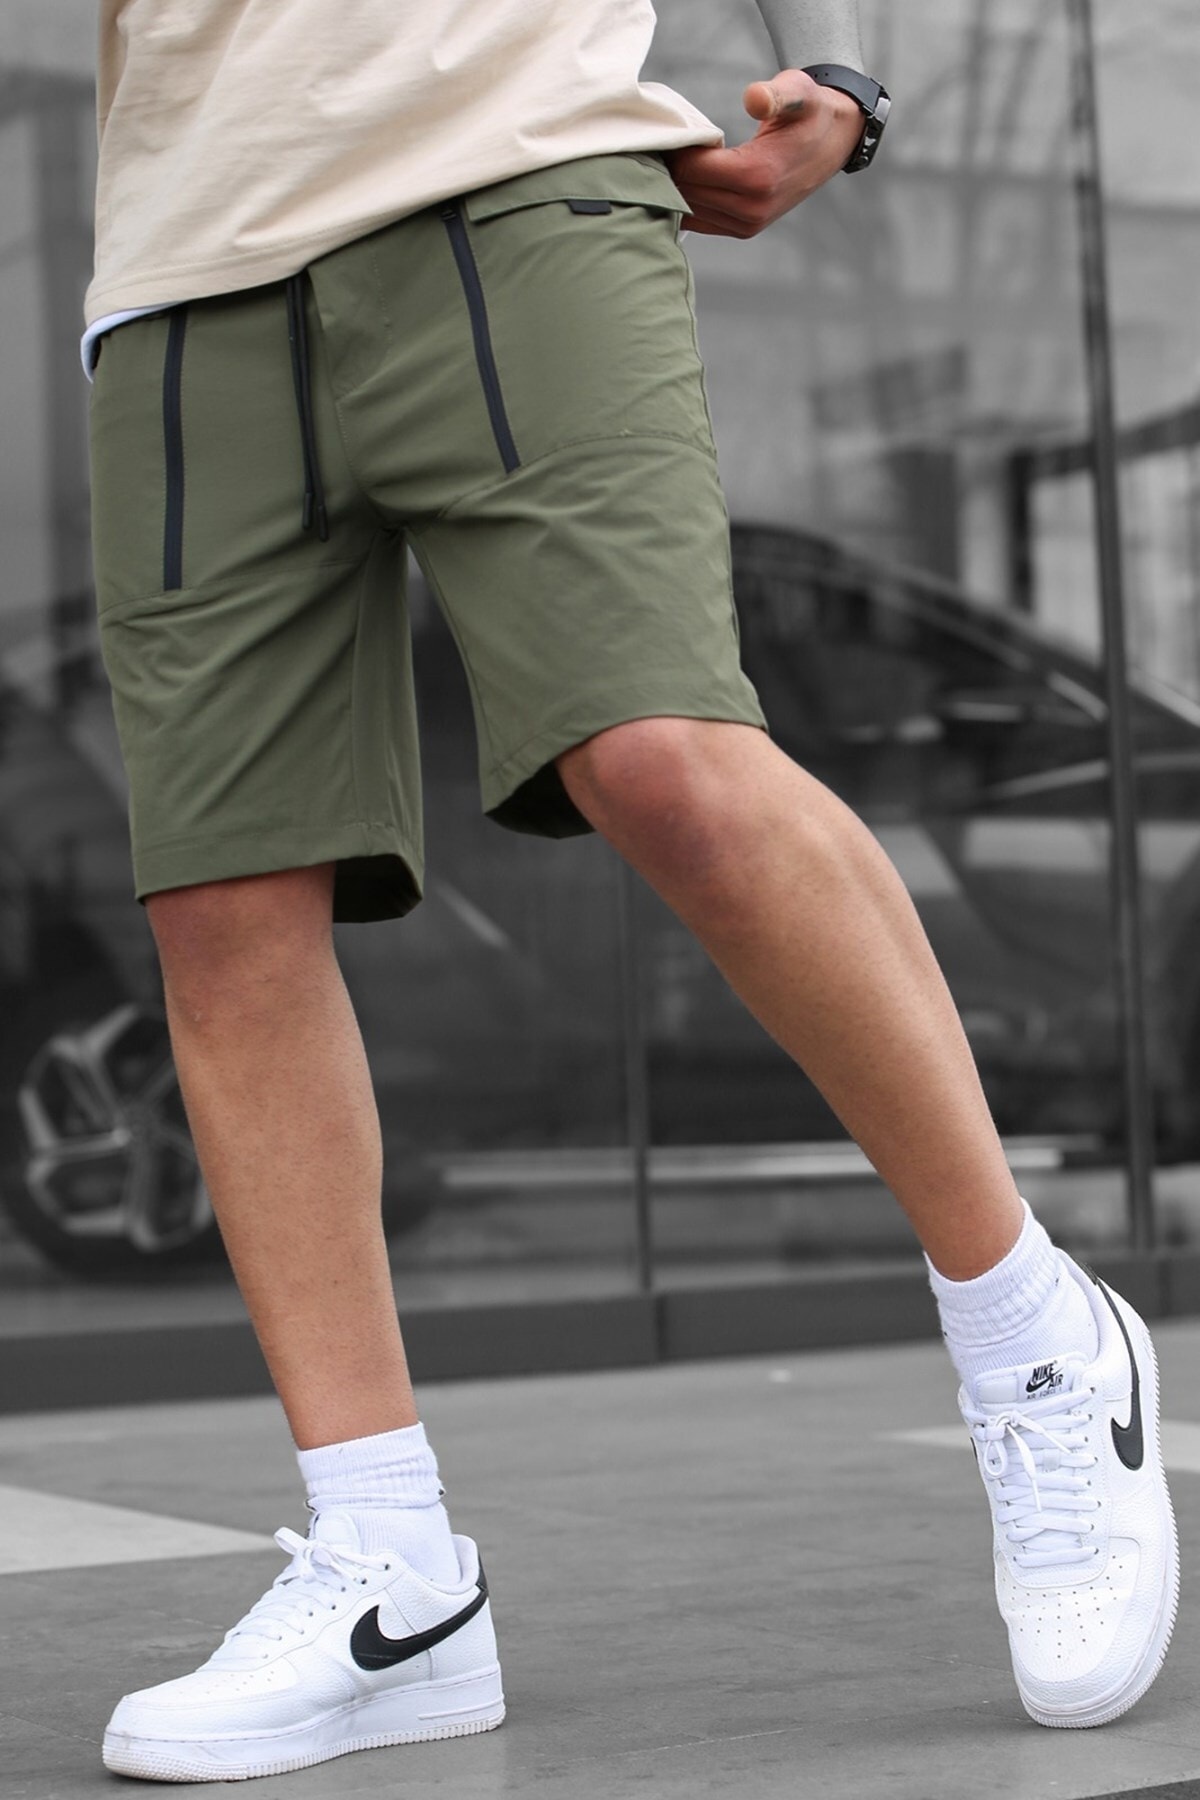 Madmext Khaki Basic Men's Capri Shorts with Pockets